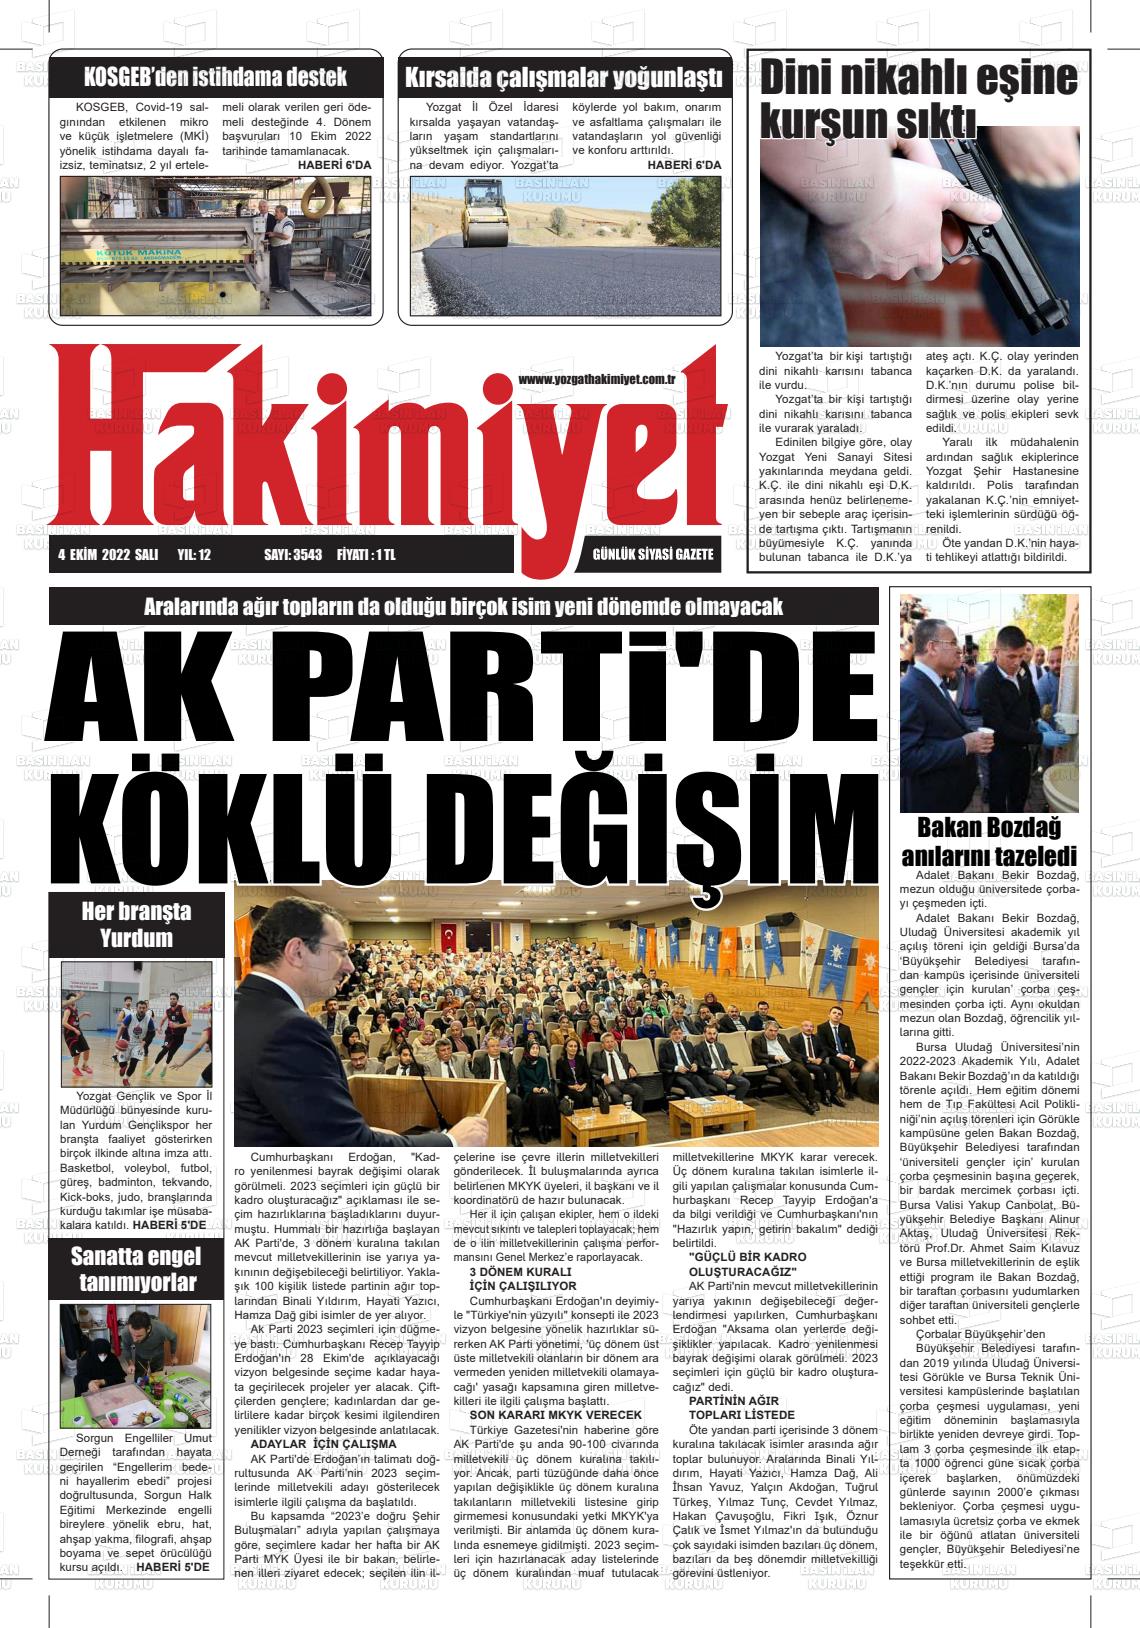 04 Ekim 2022 Yozgat Hakimiyet Gazete Manşeti